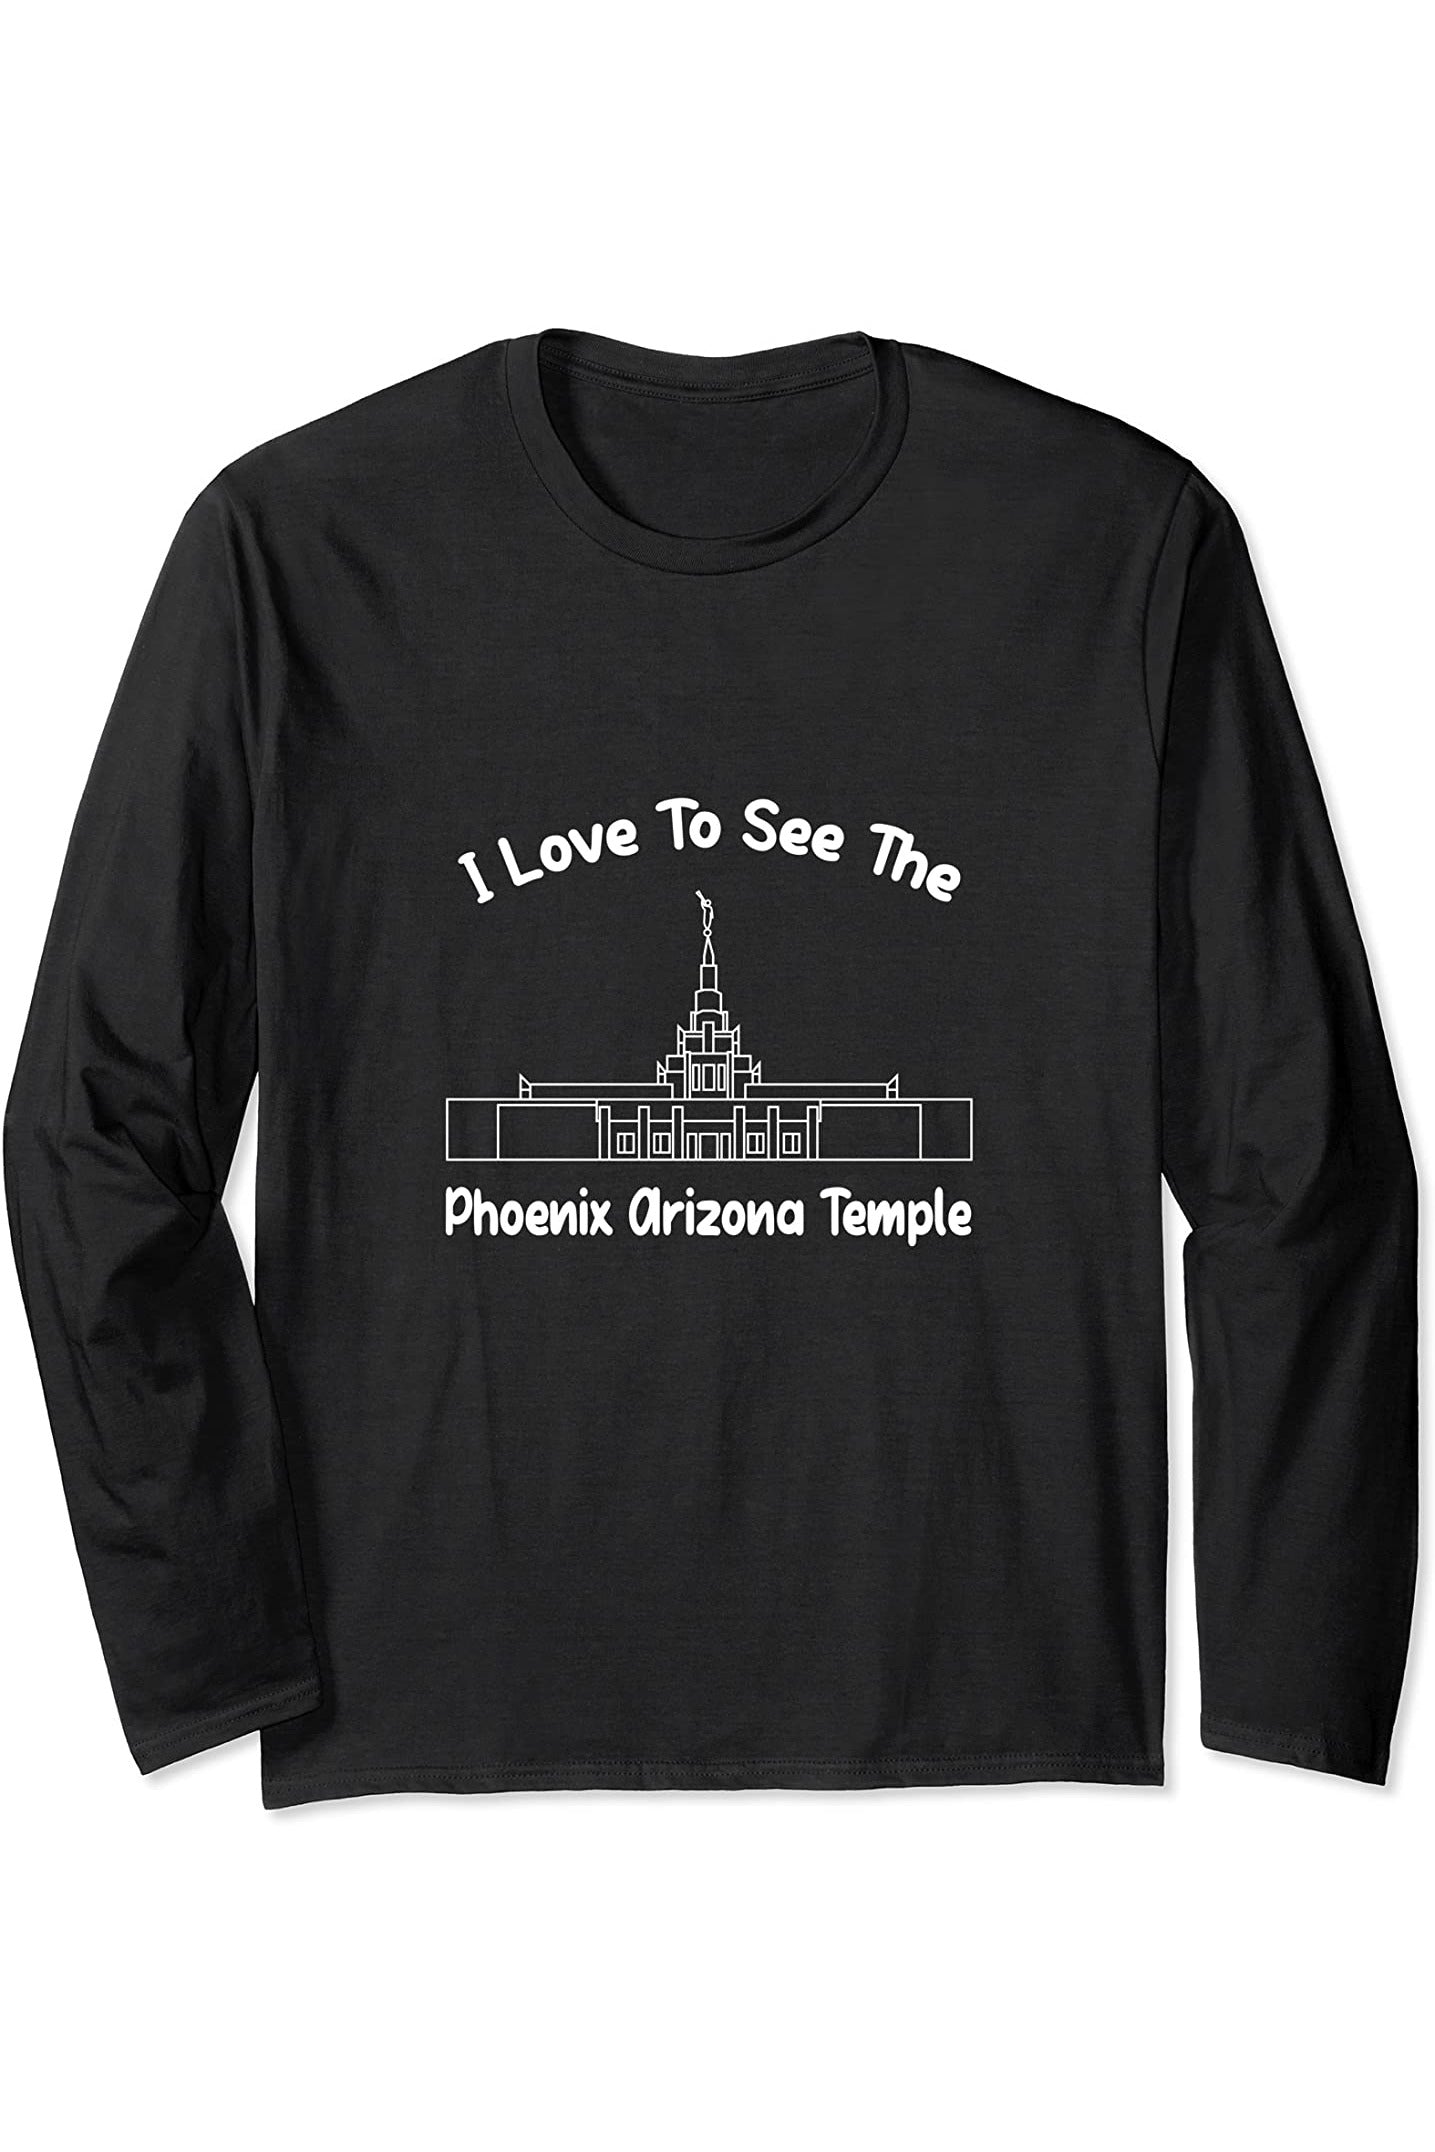 Phoenix Arizona Temple Long Sleeve T-Shirt - Primary Style (English) US